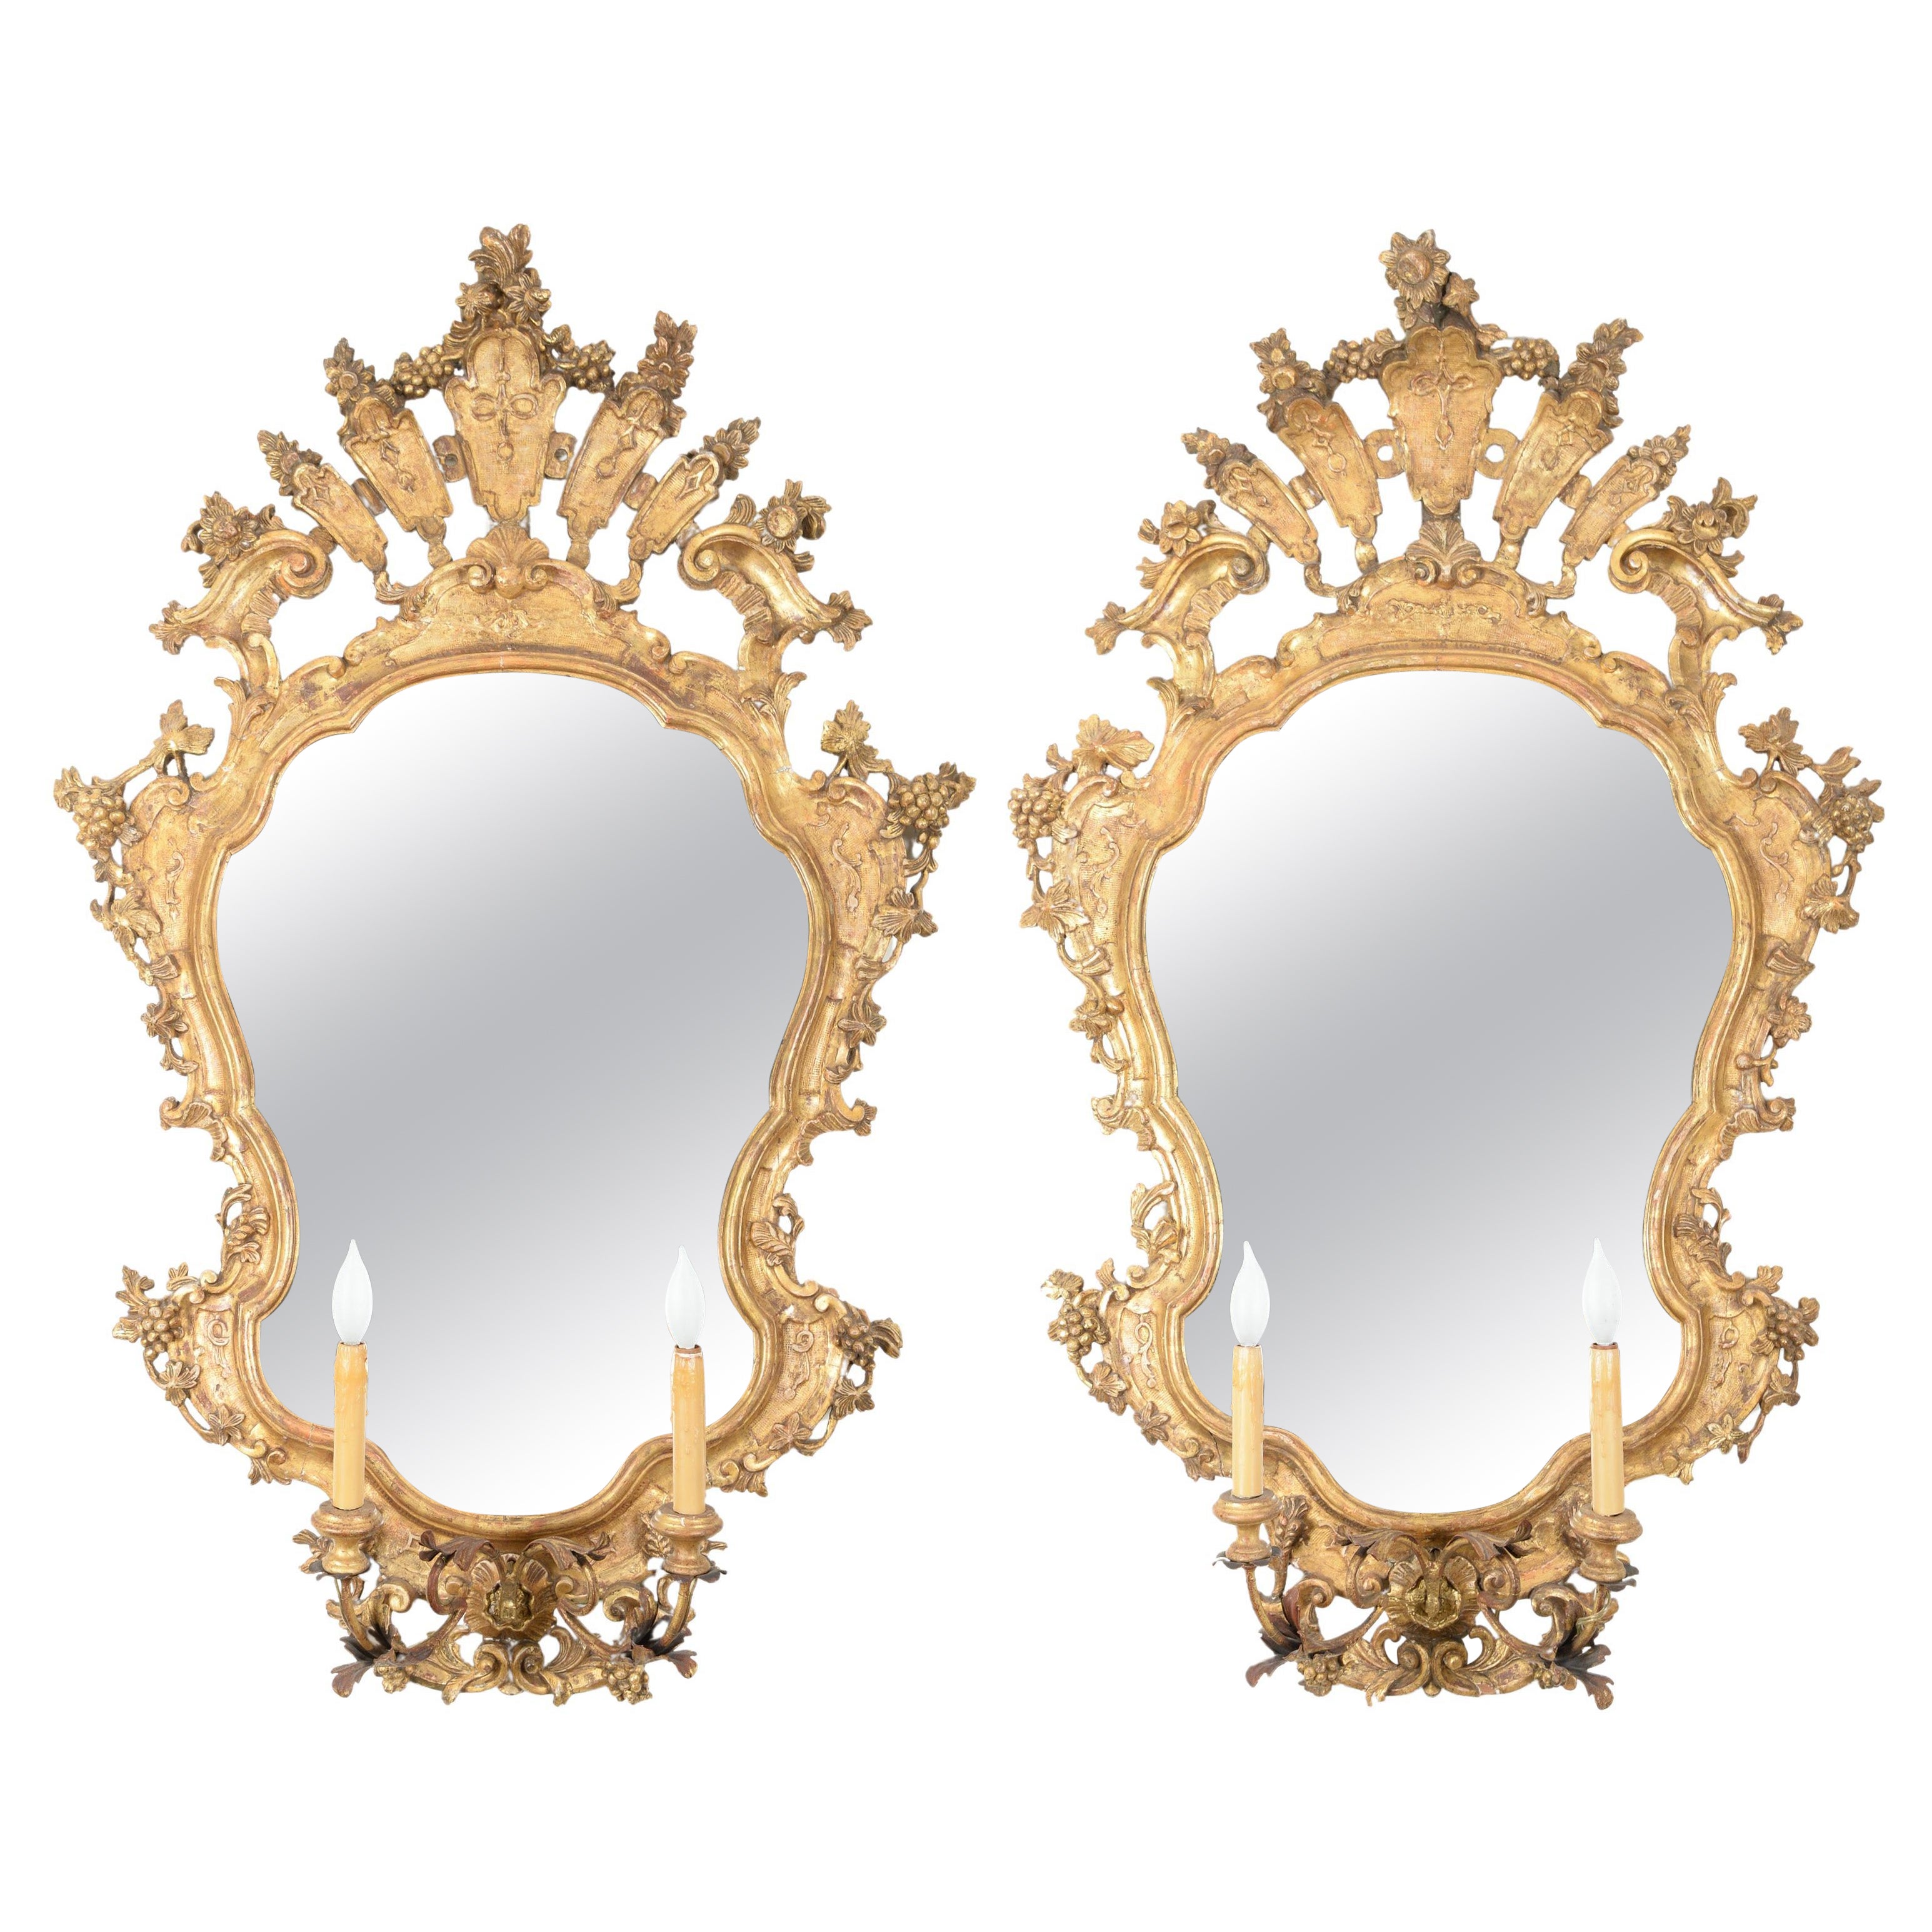 Pair of Large Italian Rococo Giltwood Mirrors (Girandoles)